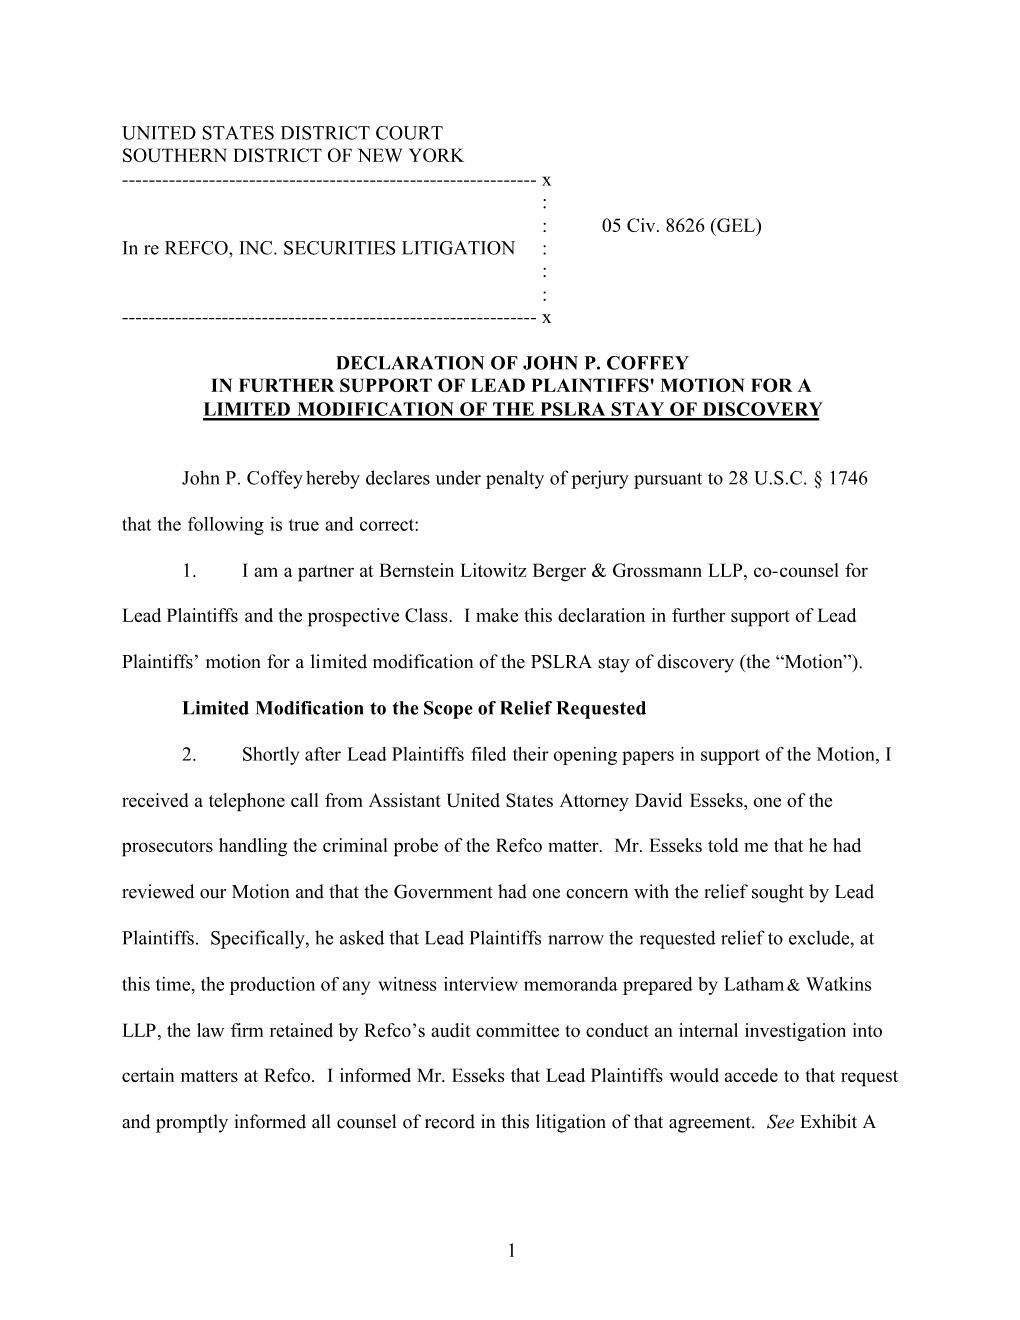 Refco, Inc. Securities Litigation 05-CV-8626-Declaration of John P. Coffey in Further Support of Lead Plaintiffs'